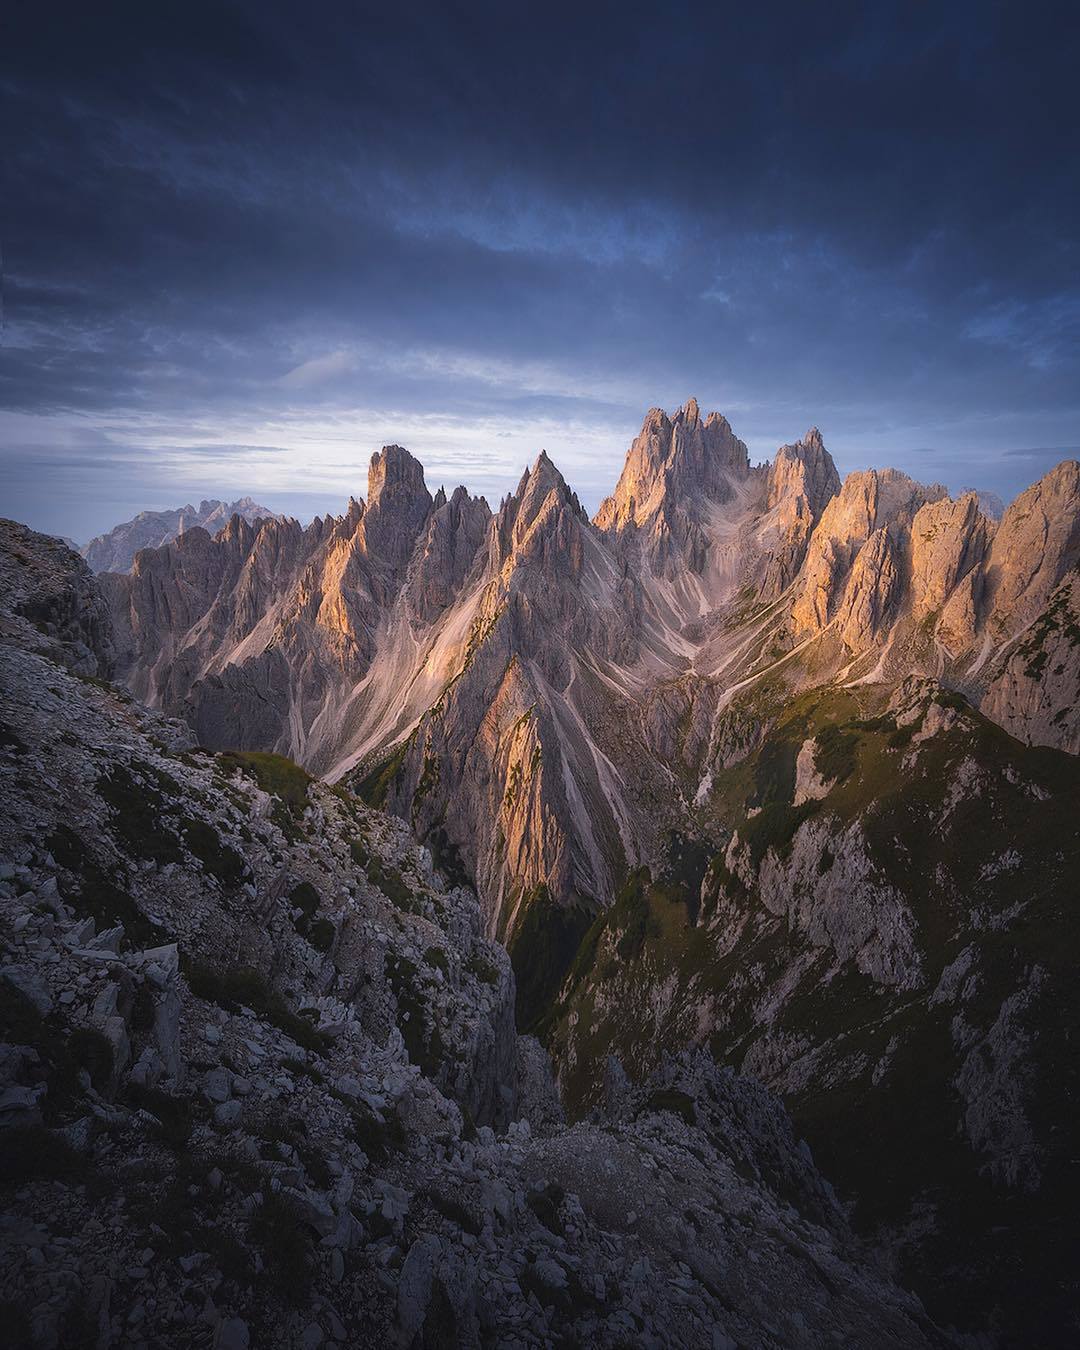  白云石山脉，来自摄影师Michael Shainblum。 